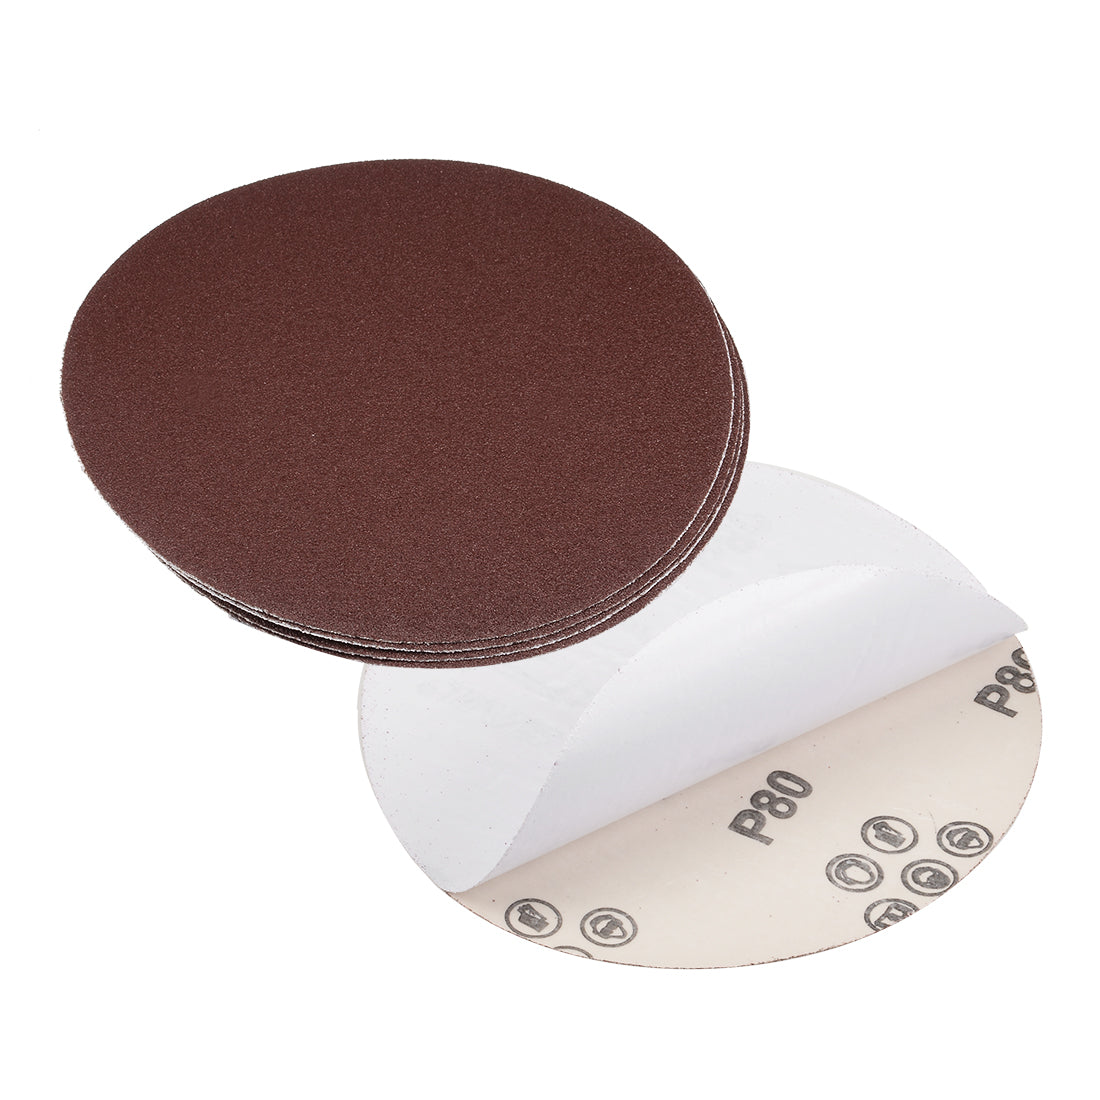 uxcell Uxcell 6-inch 80-Grits PSA Sanding Disc, Adhesive-Backed Sanding Sheets Aluminum Oxide Sandpaper for Random Orbital Sander 5pcs